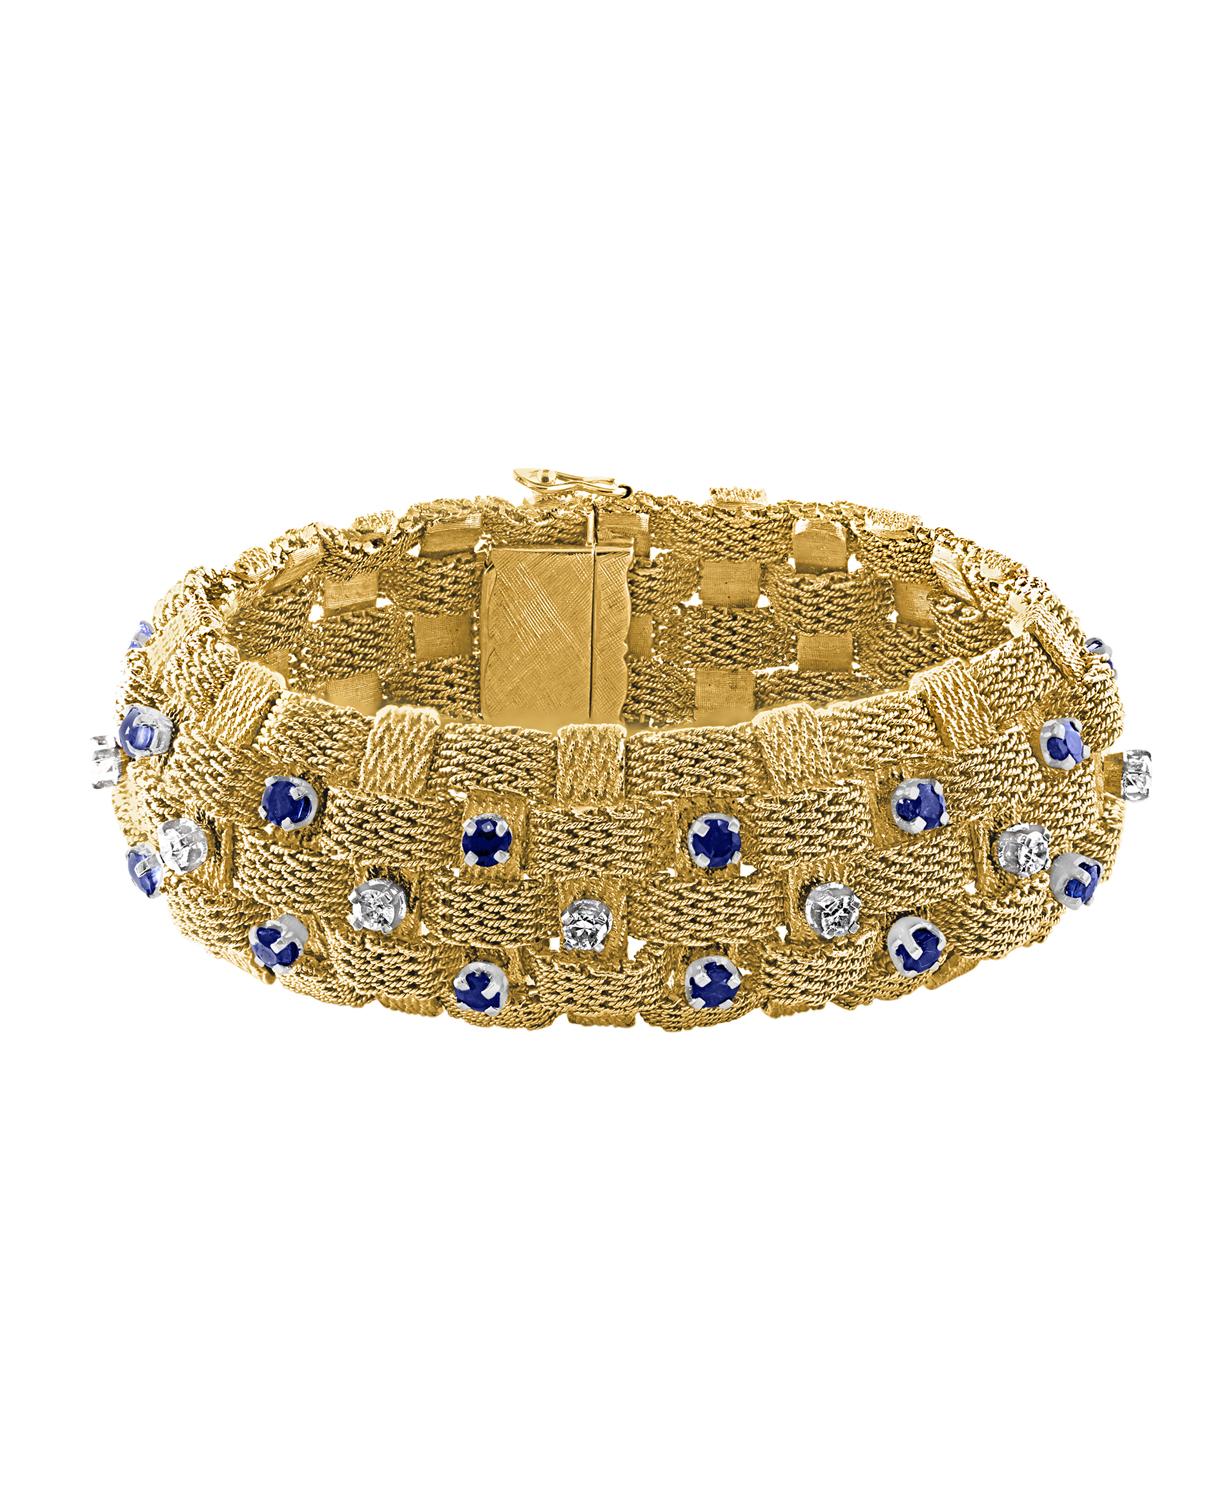 3 Carat Sapphire & 2 Carat Diamond Bracelet In 18 Karat Yellow Gold 116 Gm 7.5